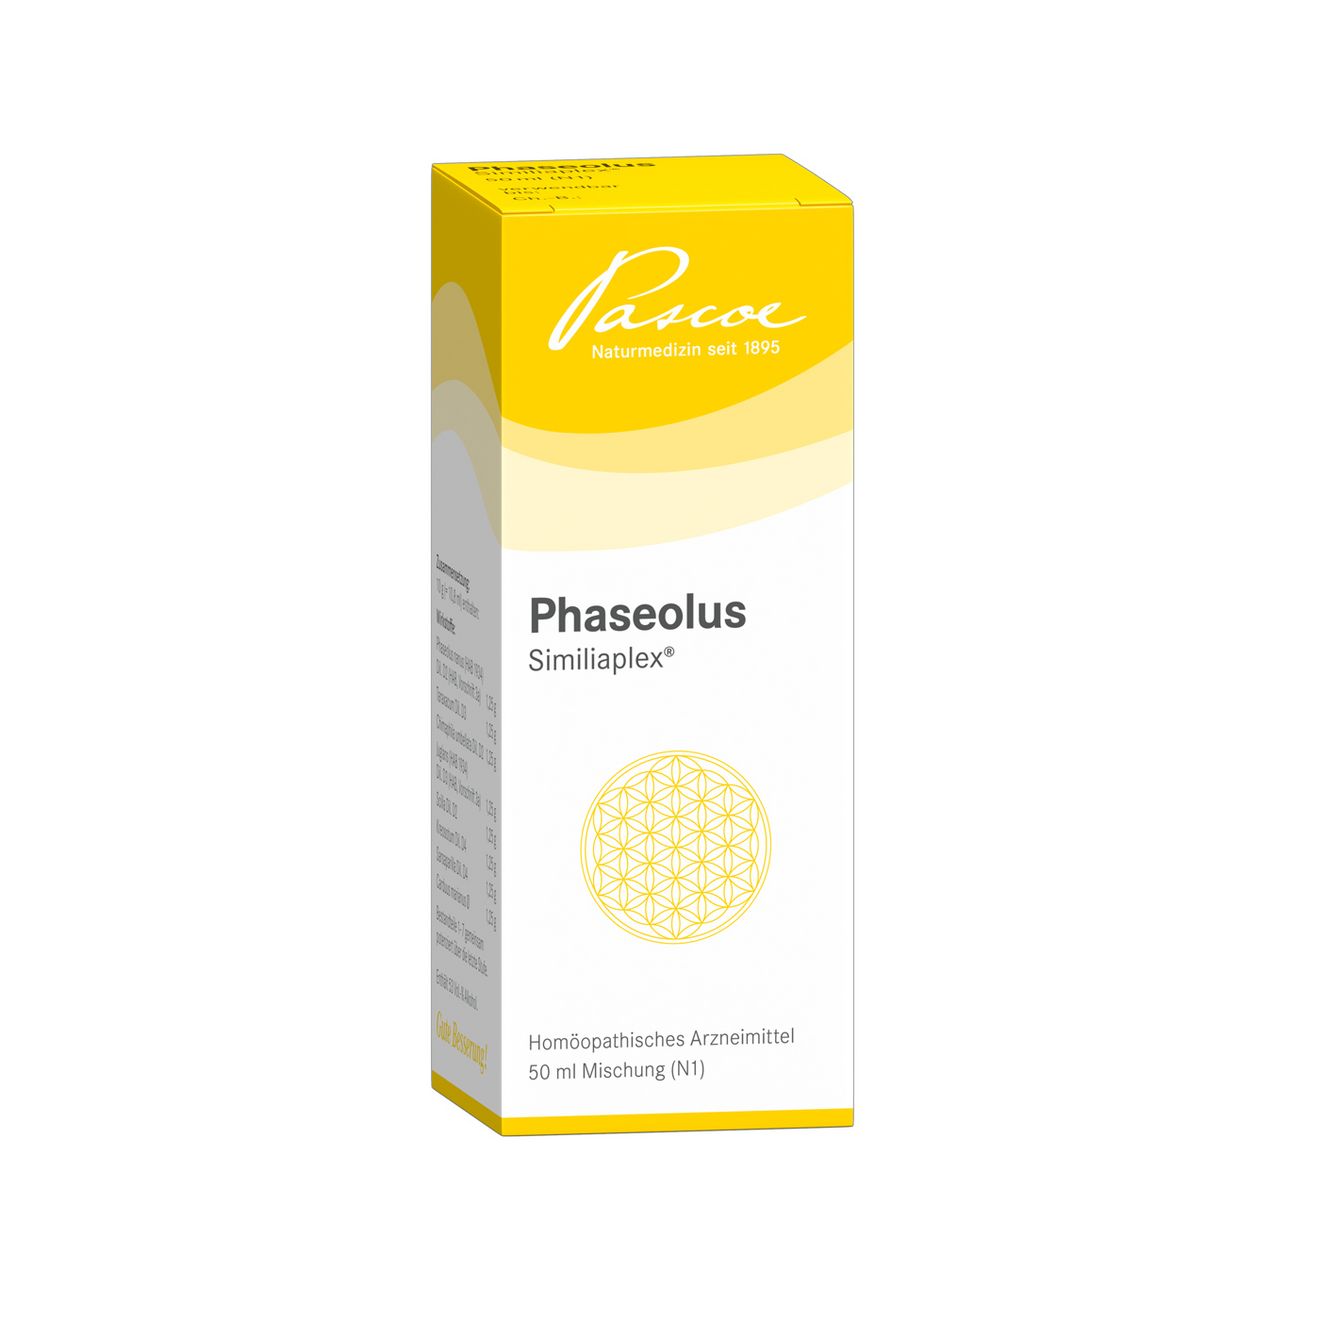 Phaseolus Similiaplex 50 ml Packshot PZN 01353717